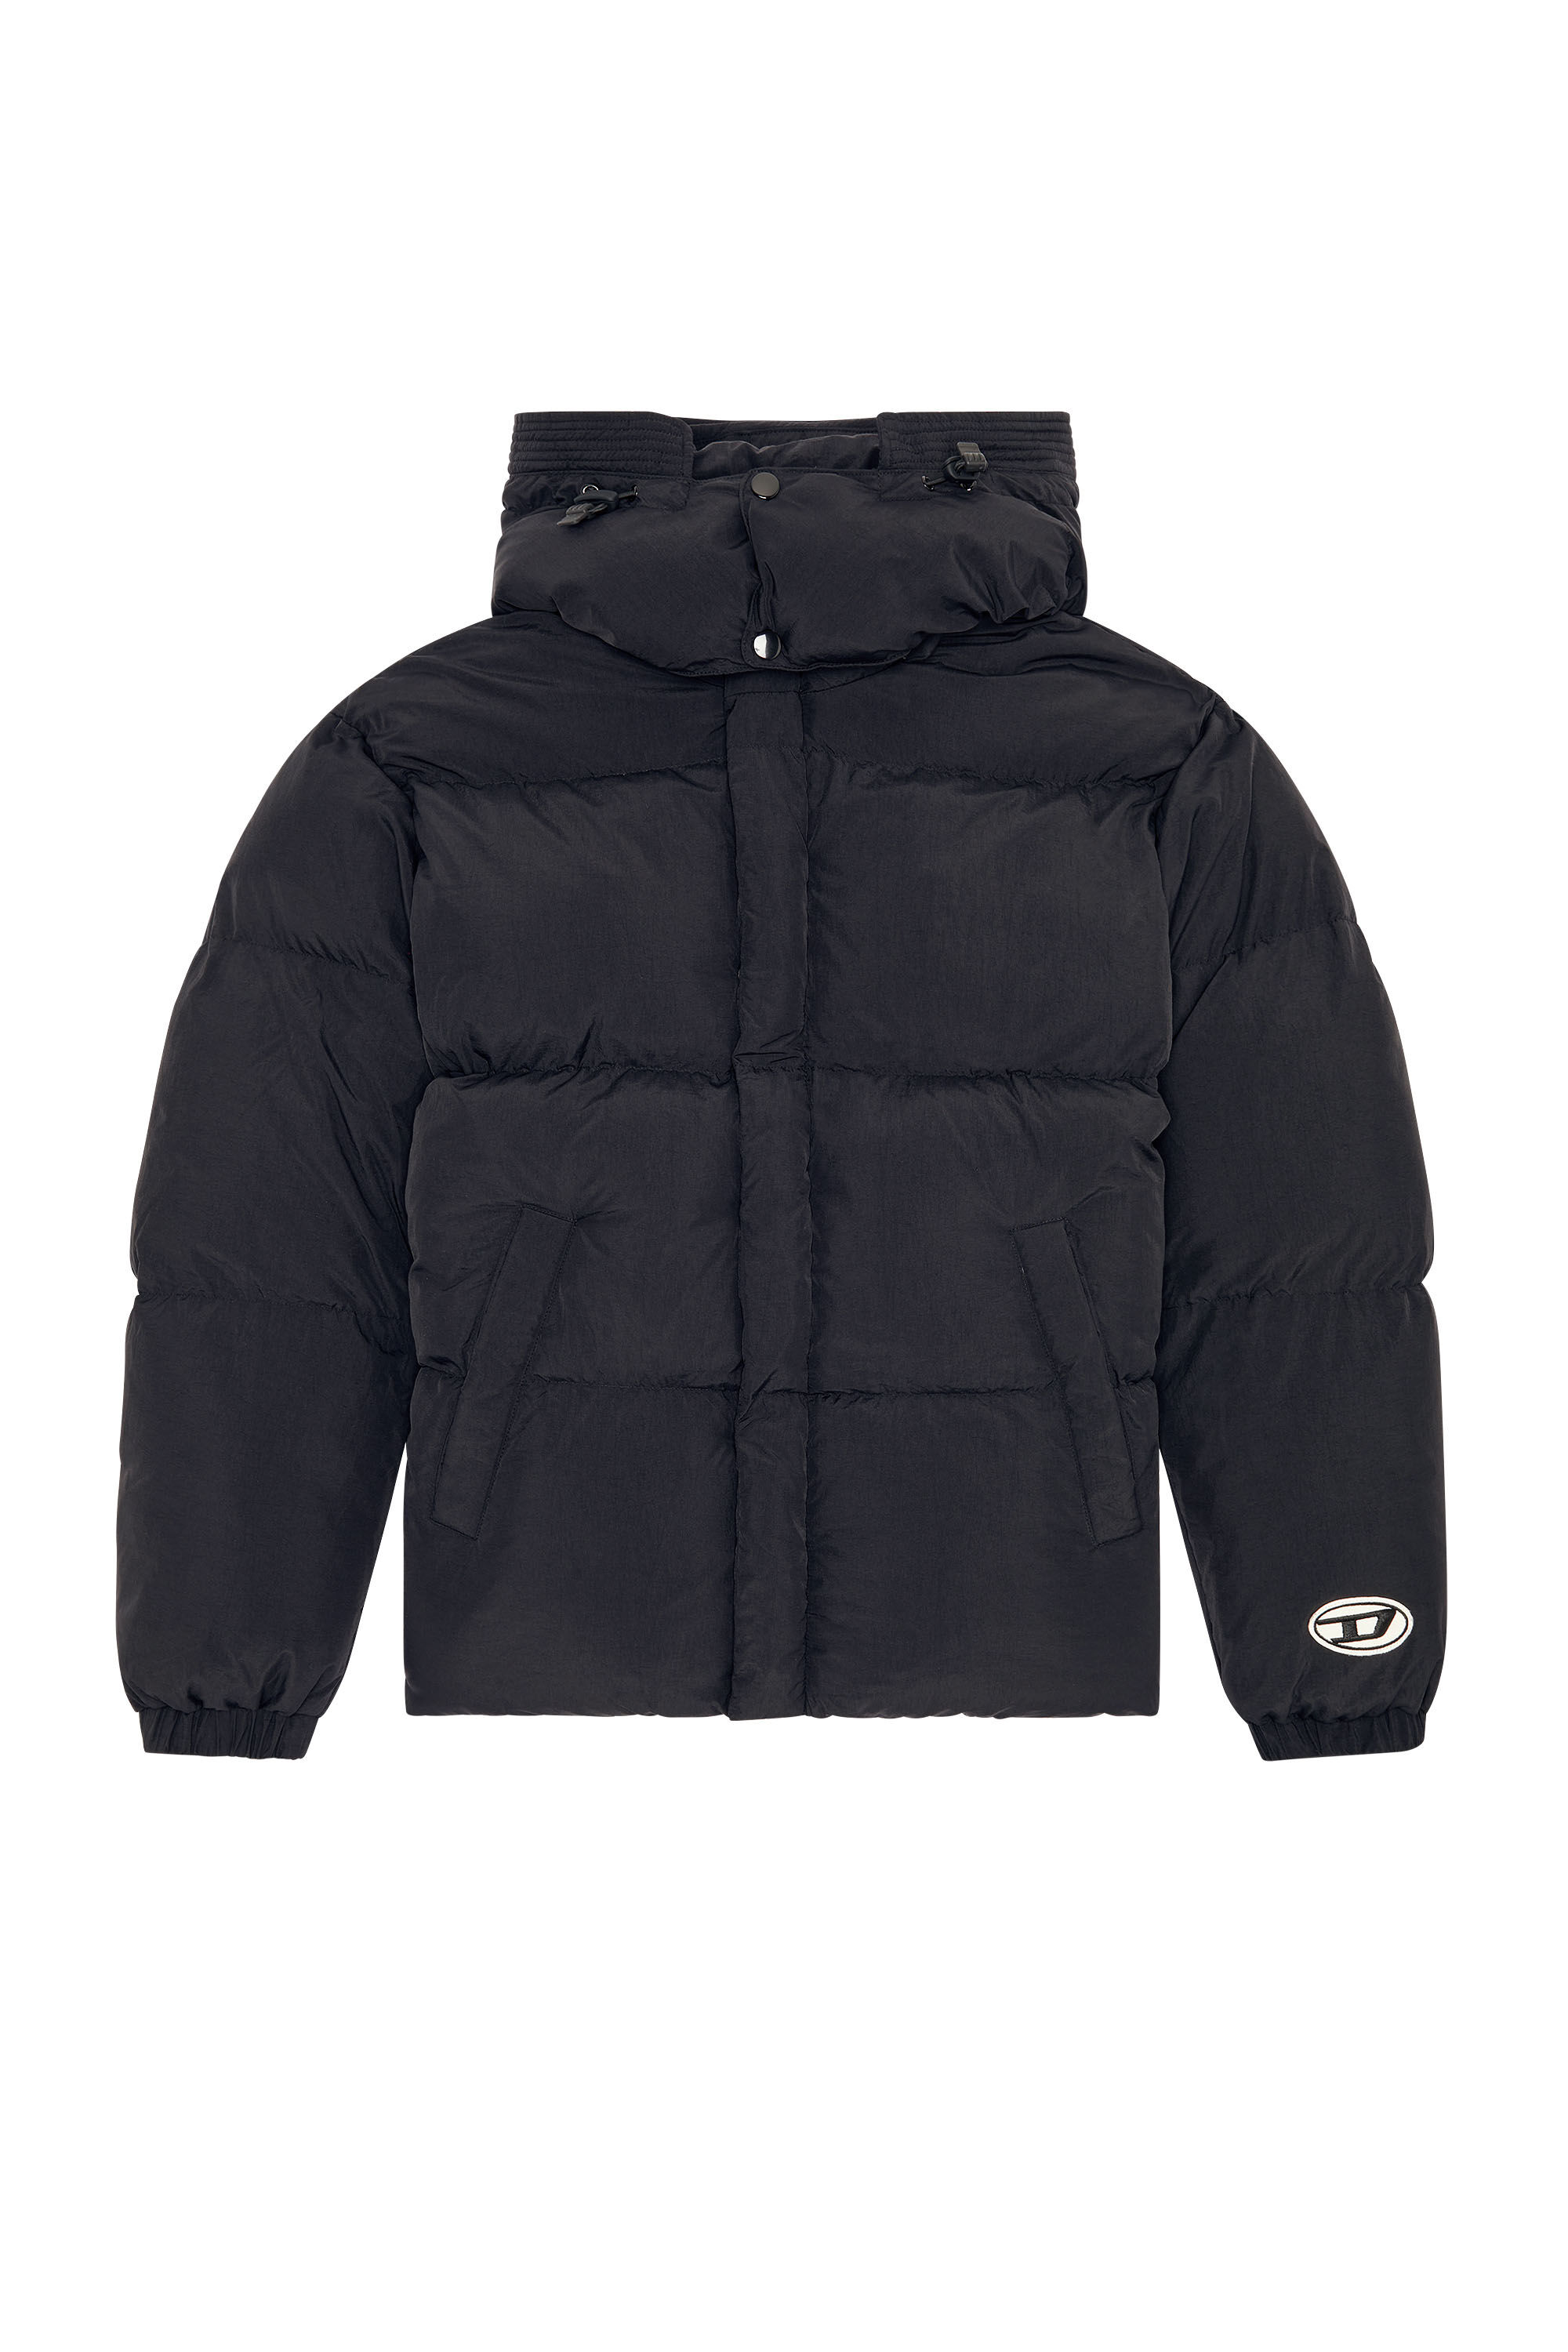 W-ROLF-FD-NW Man: Polygiene ViralOff® puffer jacket | Diesel